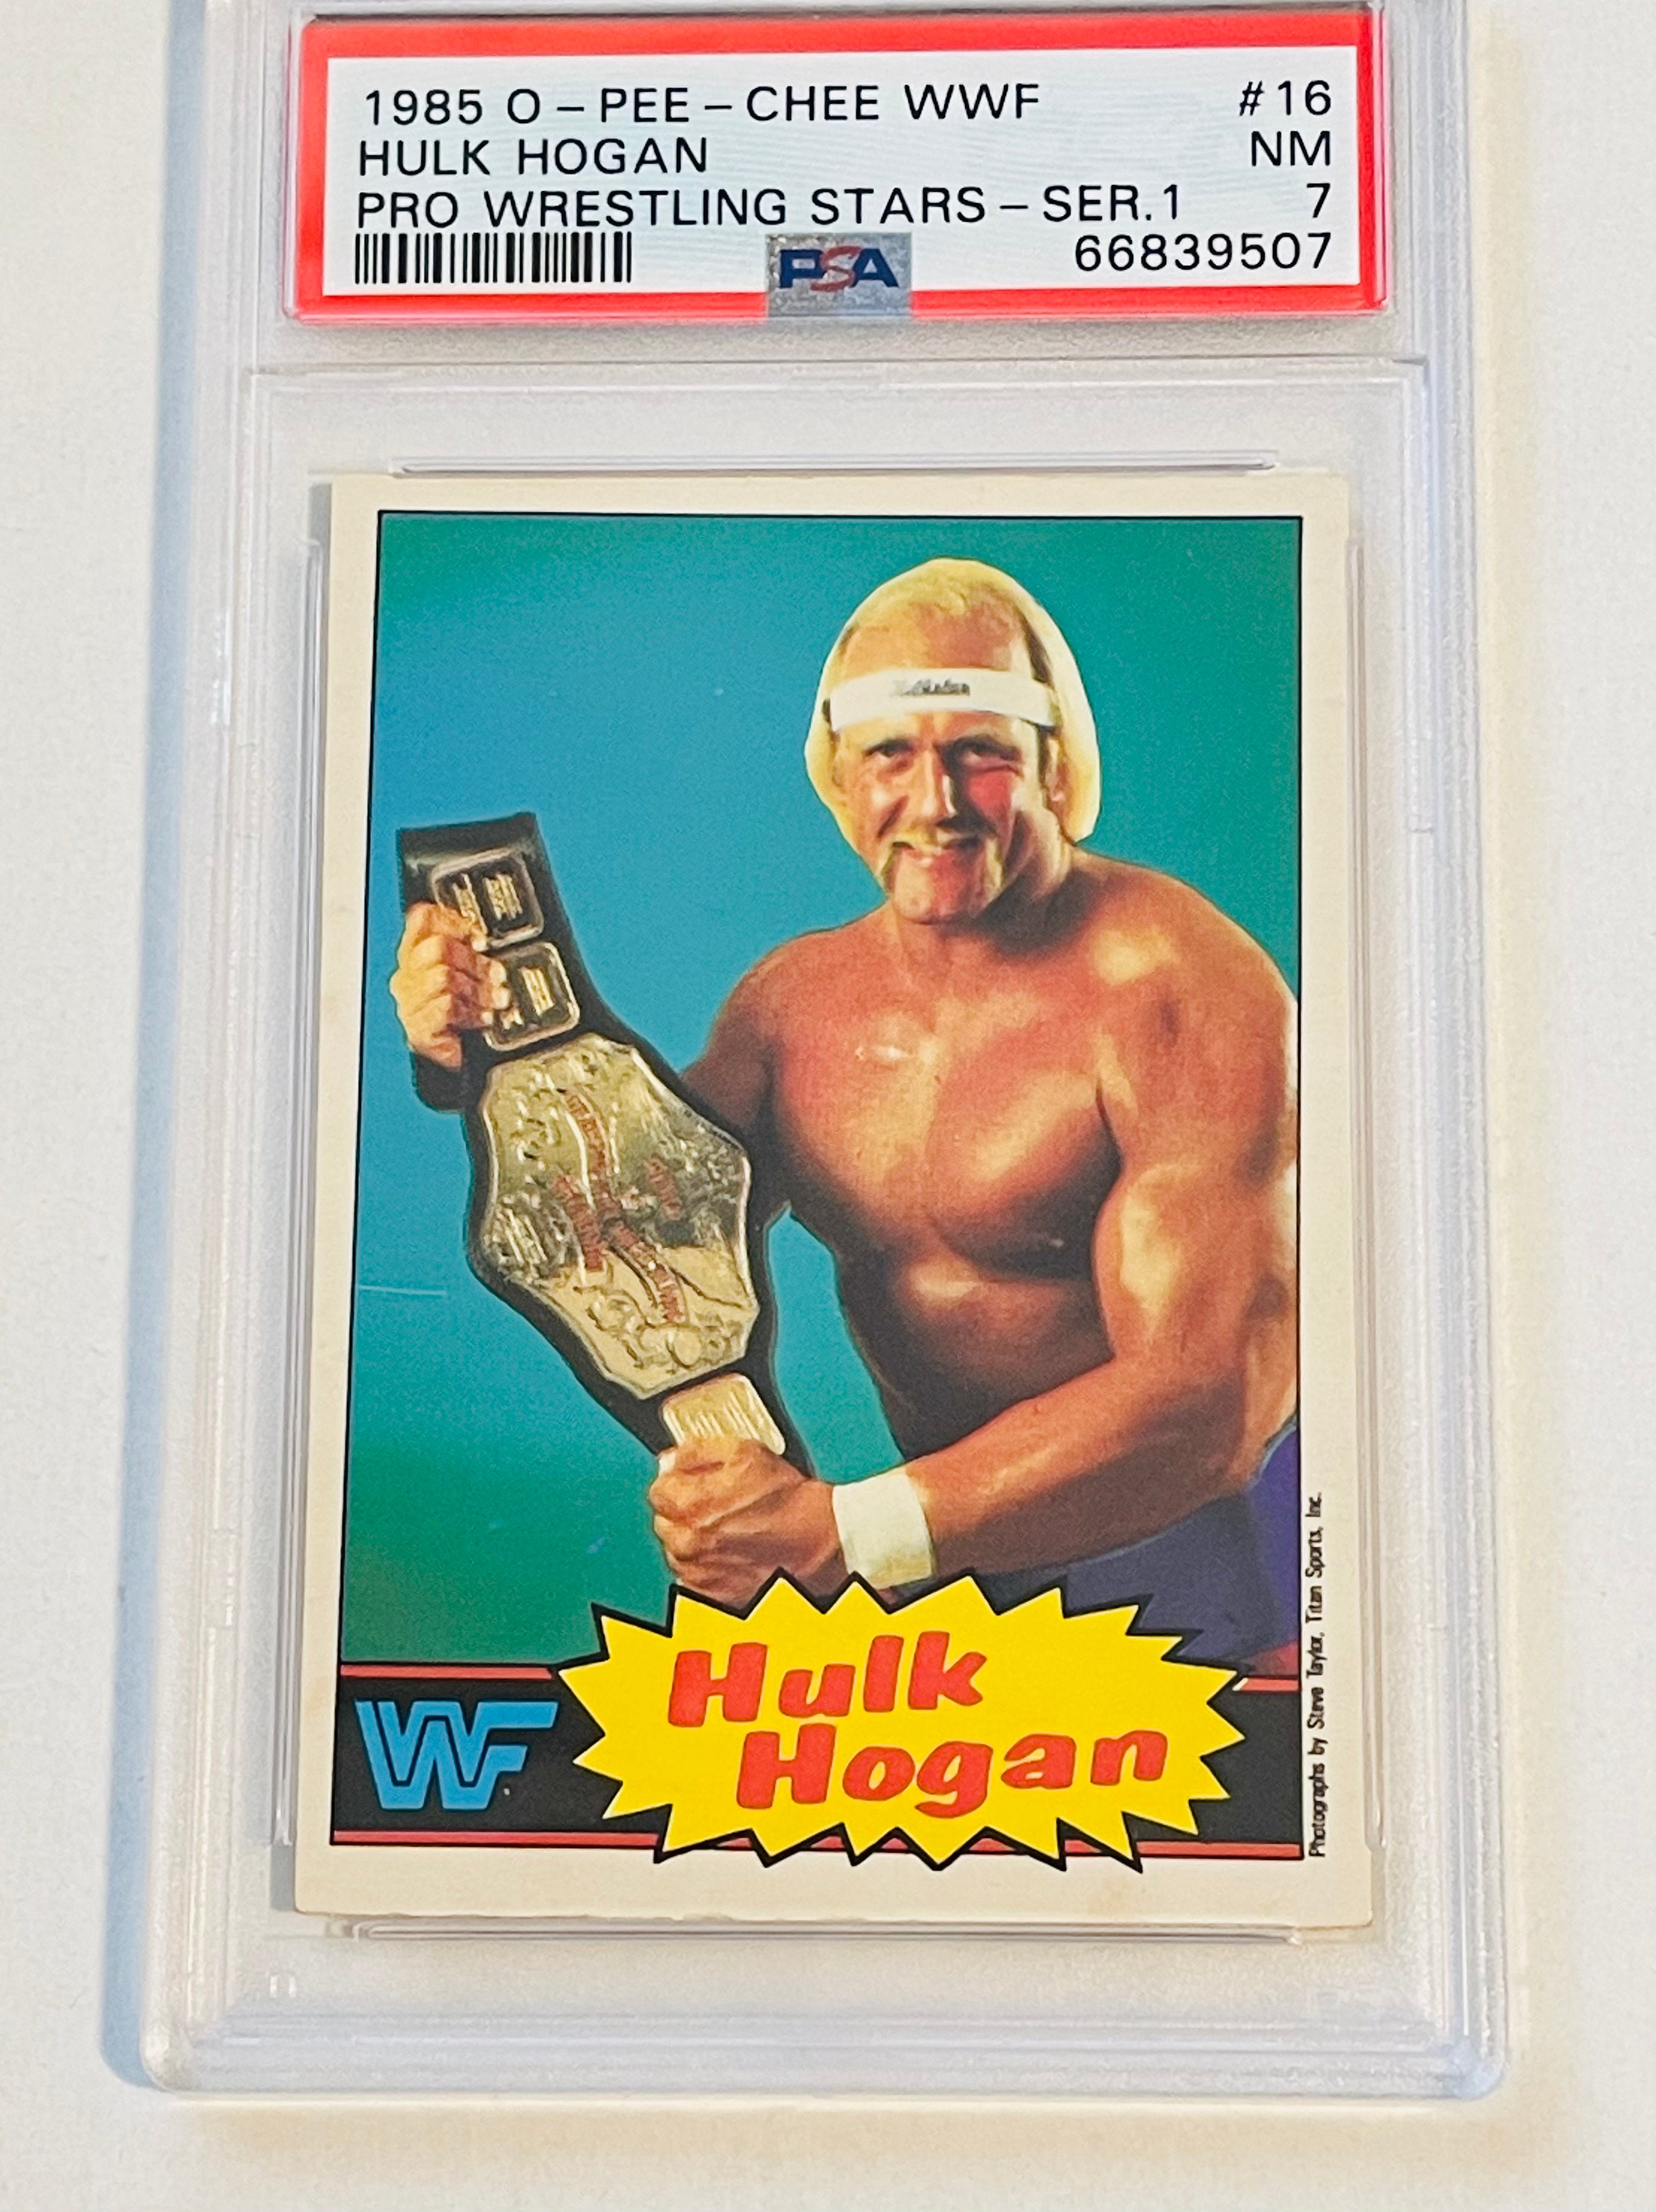 Wrestling Hulk Hogan opc rookie card PSA 7 from 1985